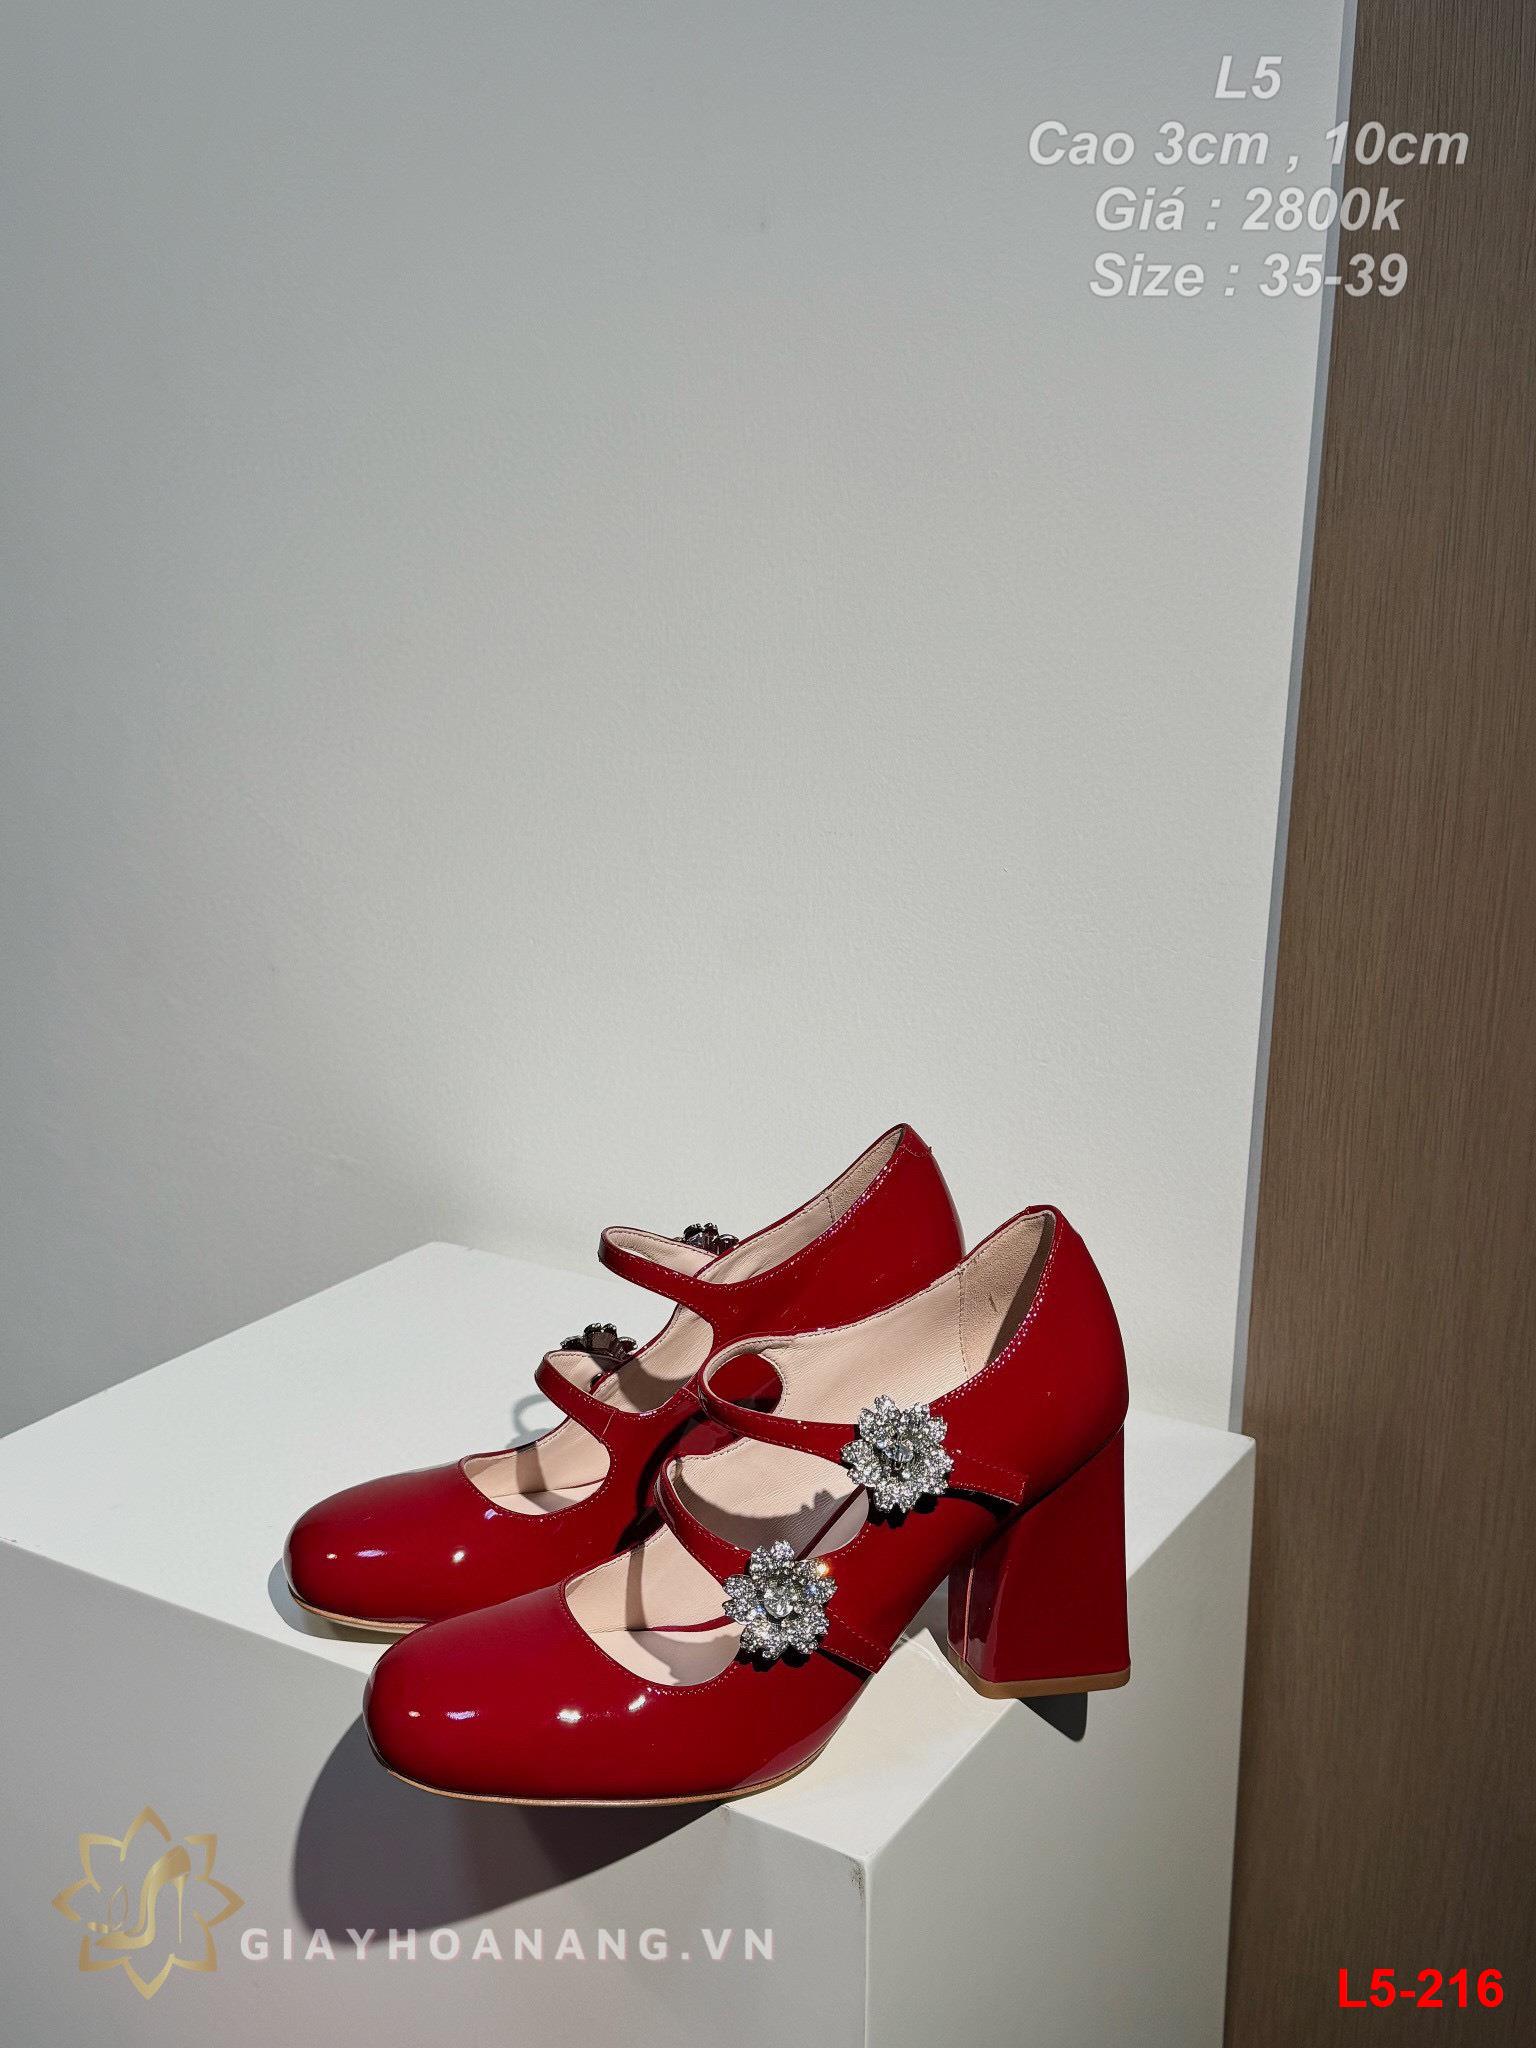 L5-216 Dior giày cao 3cm , 10cm siêu cấp